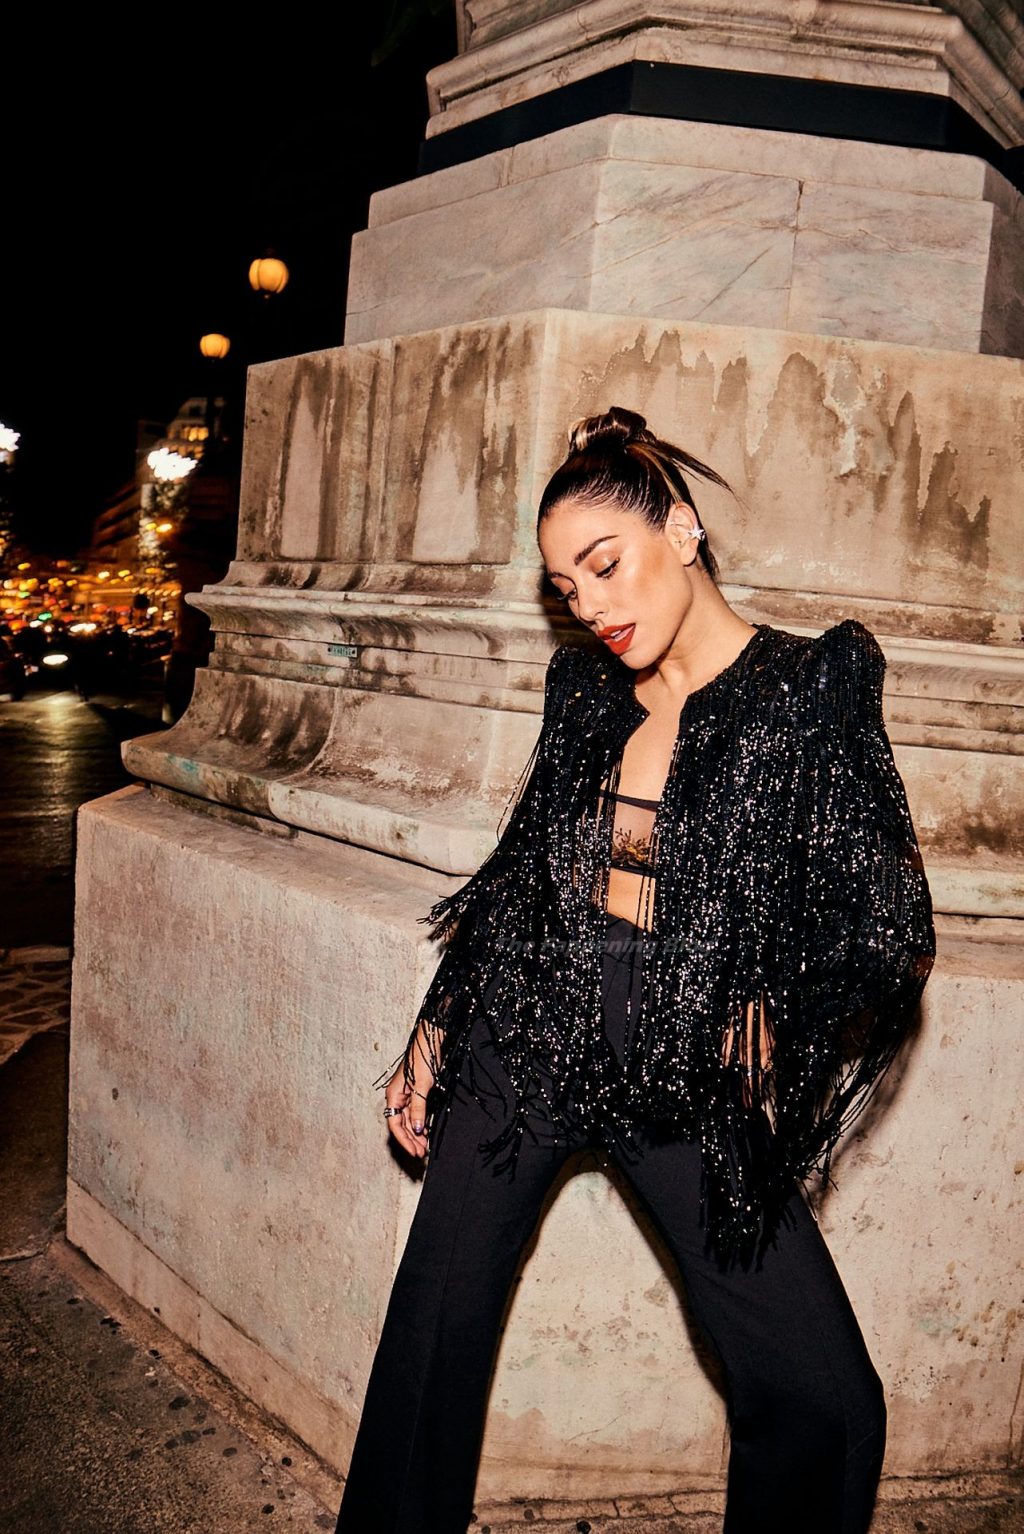 Busty Blanca Suárez Attends the Fashion Show at the Paris Opera House (26 Photos)